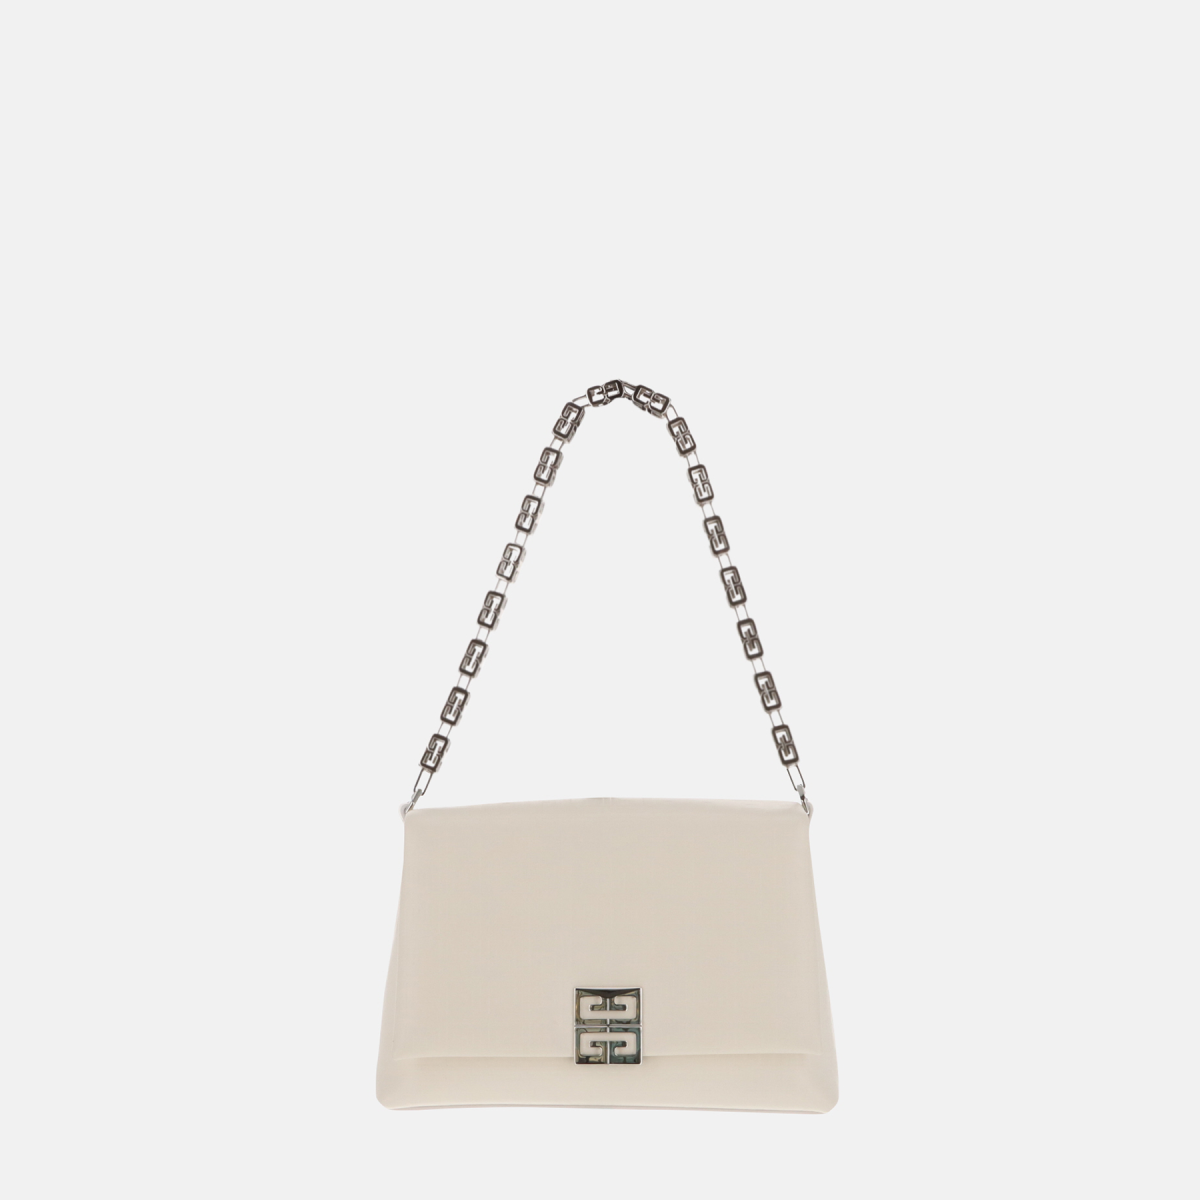 Givenchy 4G soft bag